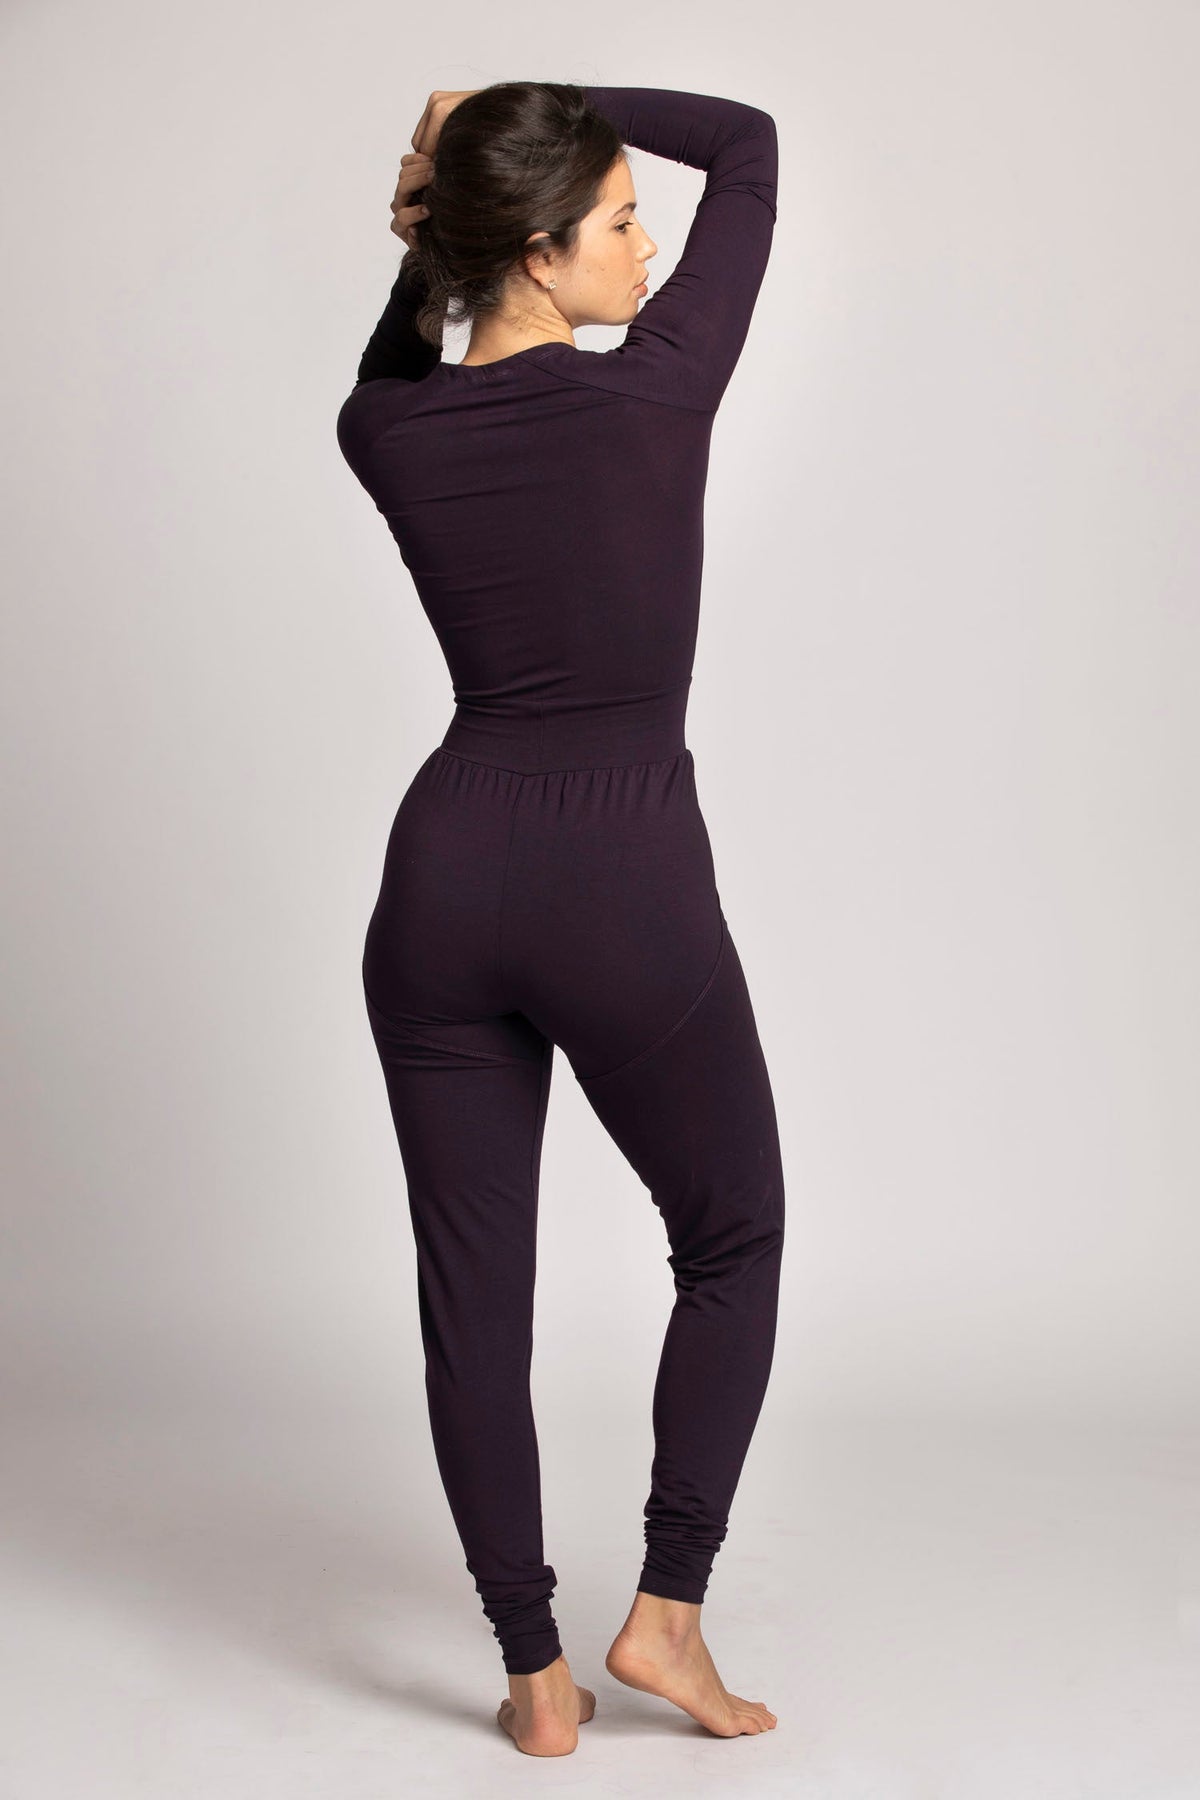 Long Sleeve Yoga Jumpsuit womens clothing Ripple Yoga Wear eggplant XS 